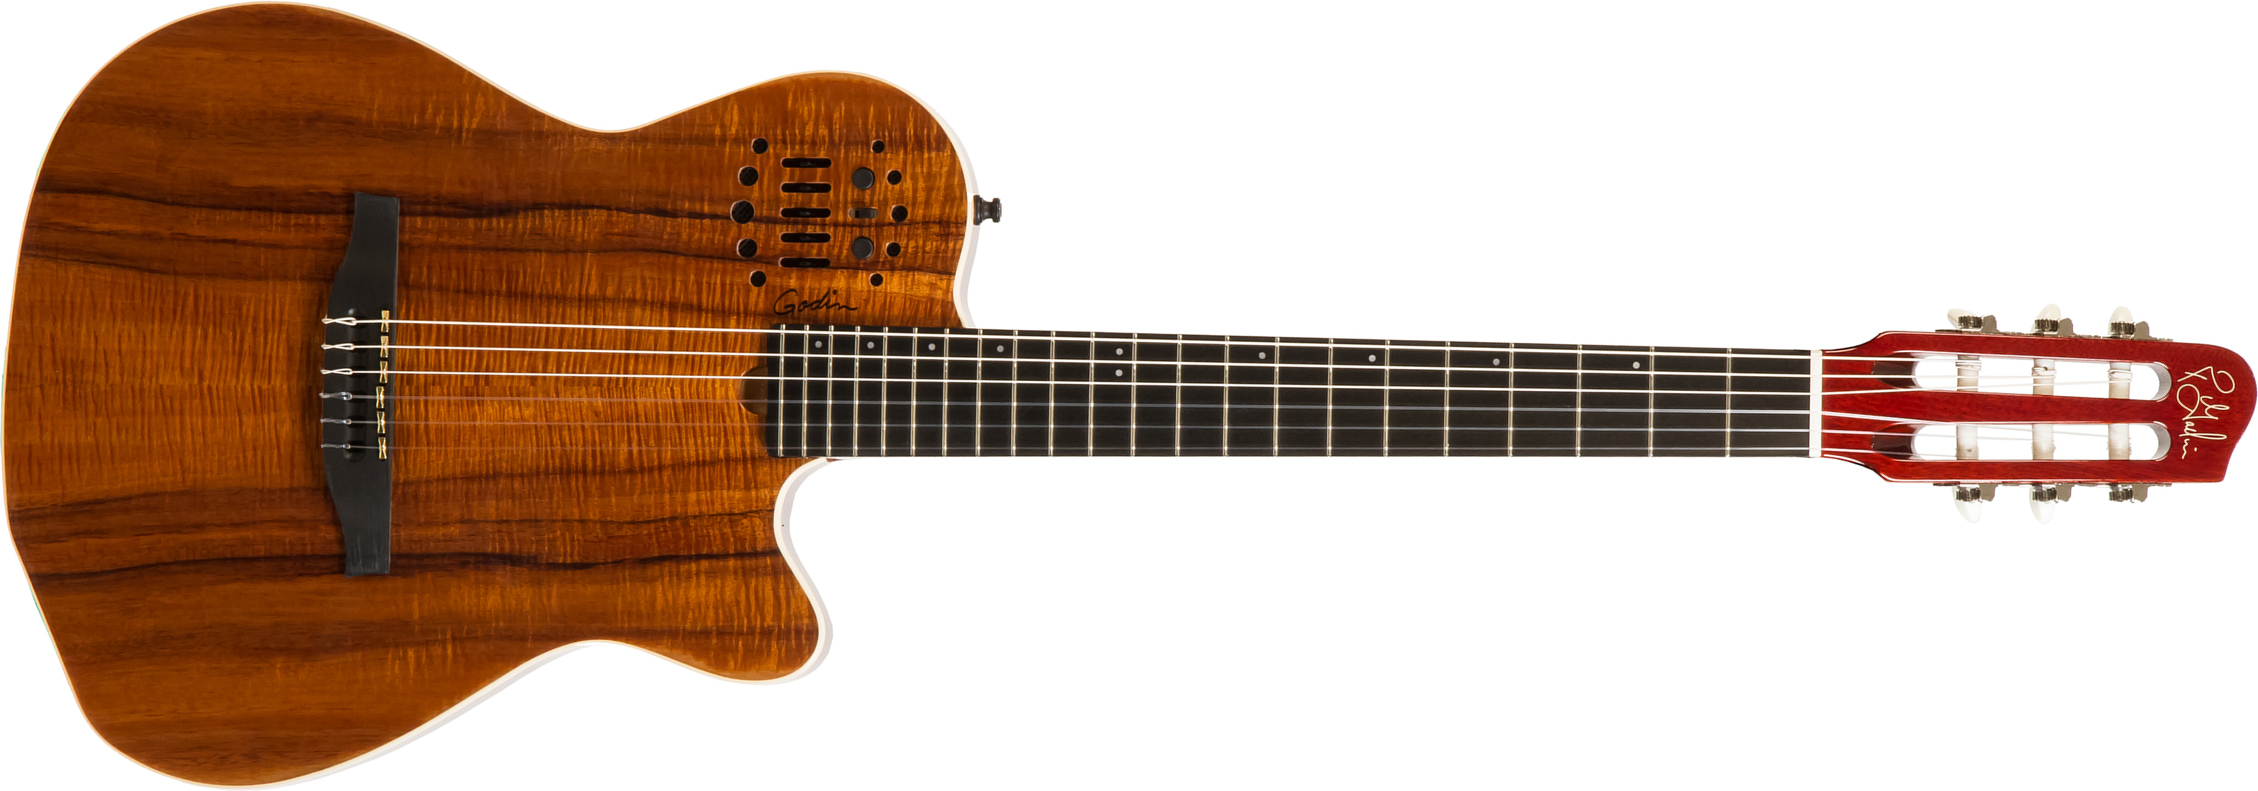 Godin Multiac Nylon Acs Koa Extreme +housse - Natural Hg - Classical guitar 4/4 size - Main picture